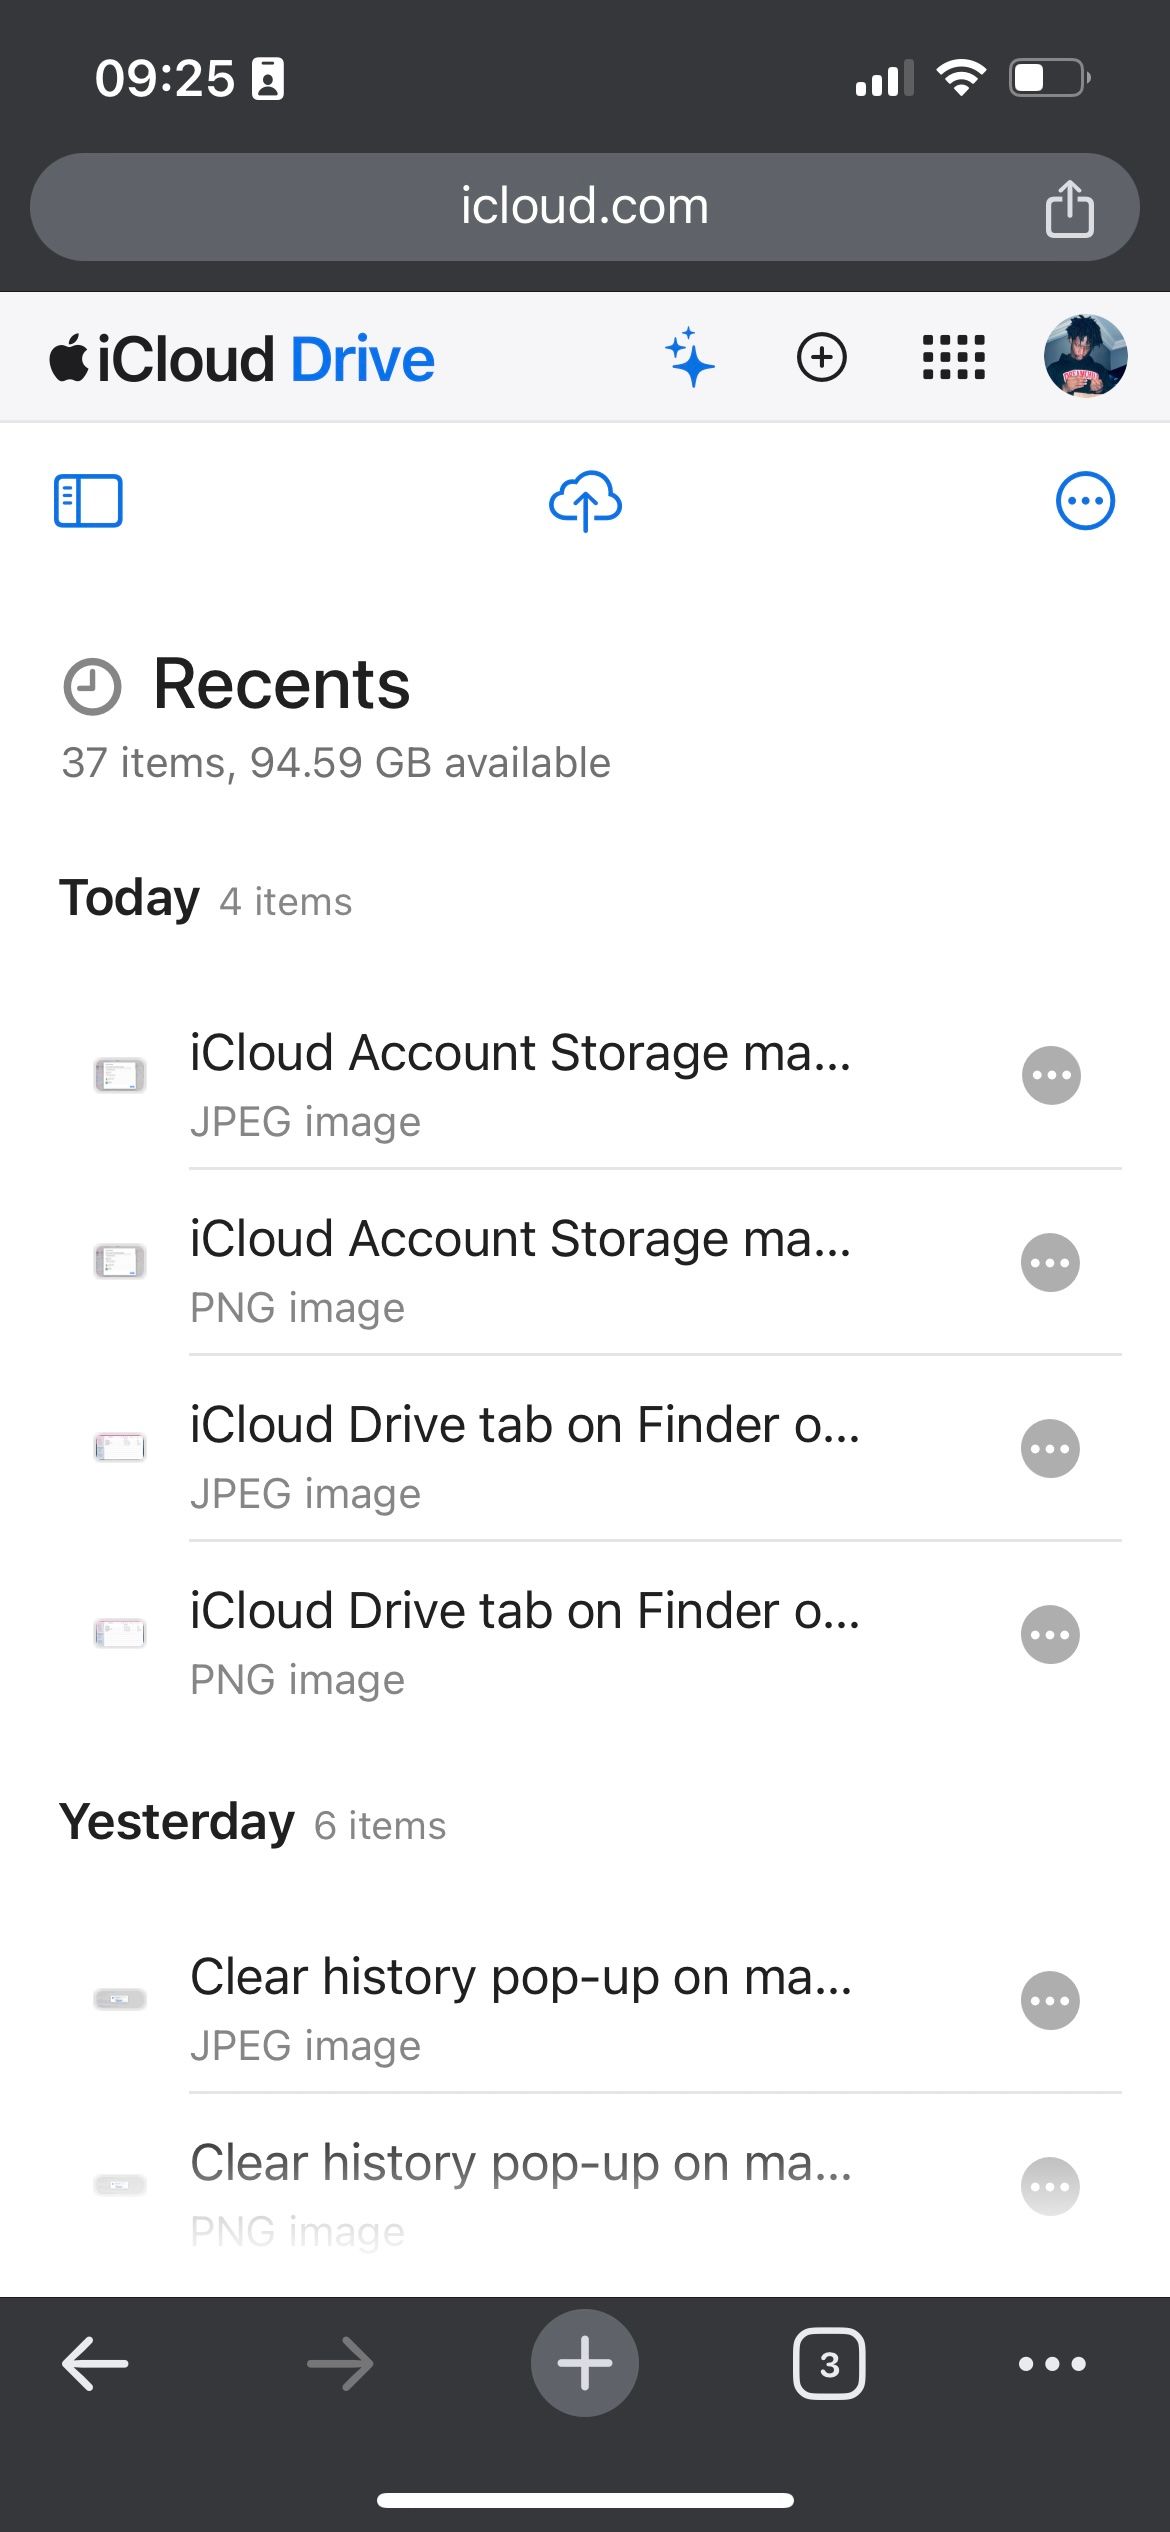 iCloud Drive page on iCloud web